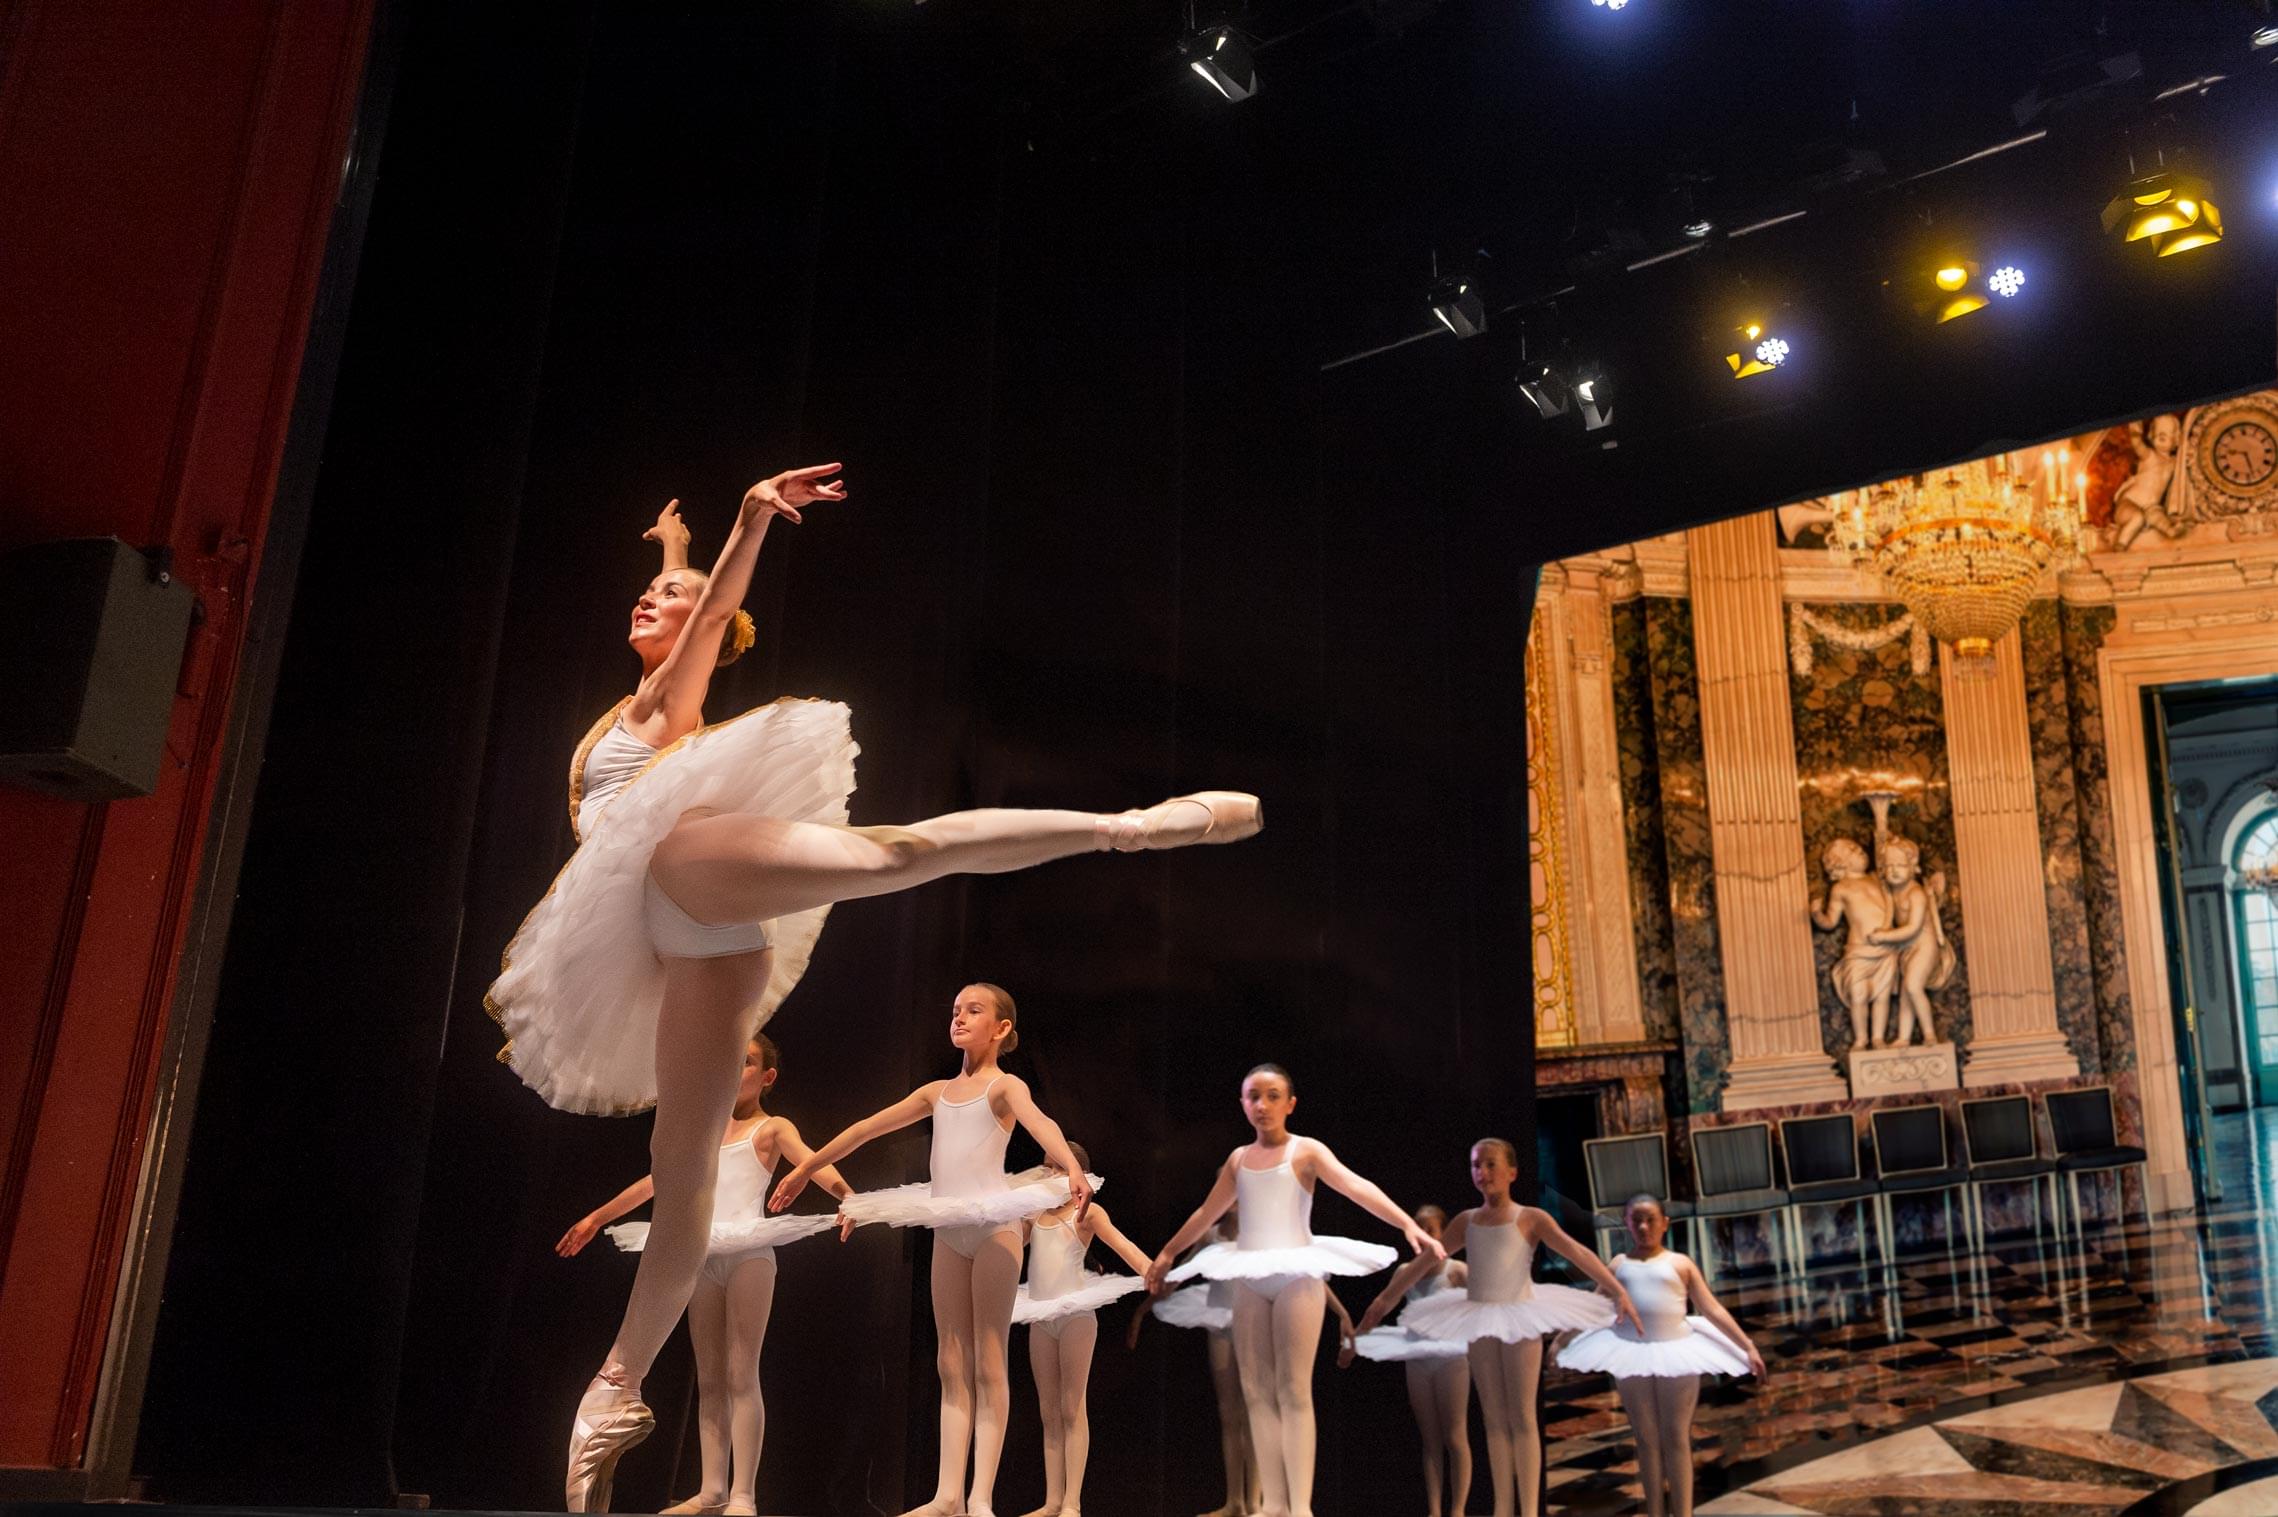 Escuela Ballet Anne Markoartu. Suite Masquerade